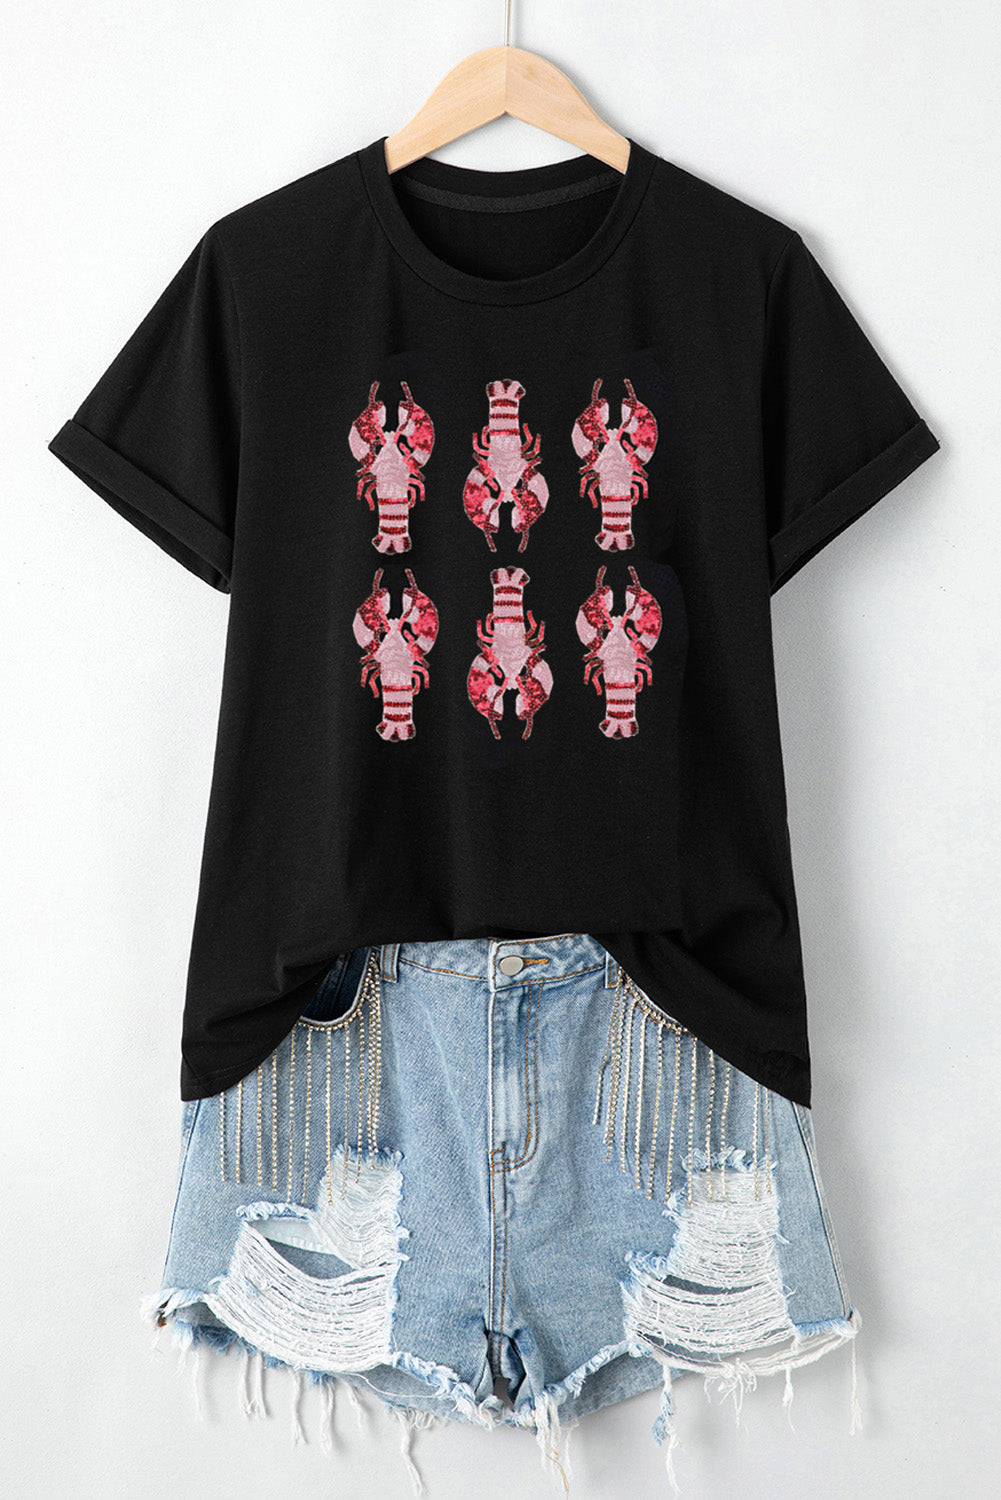 Black Sequin Crawfish Graphic Western Fashion T Shirt Graphic Tees JT's Designer Fashion